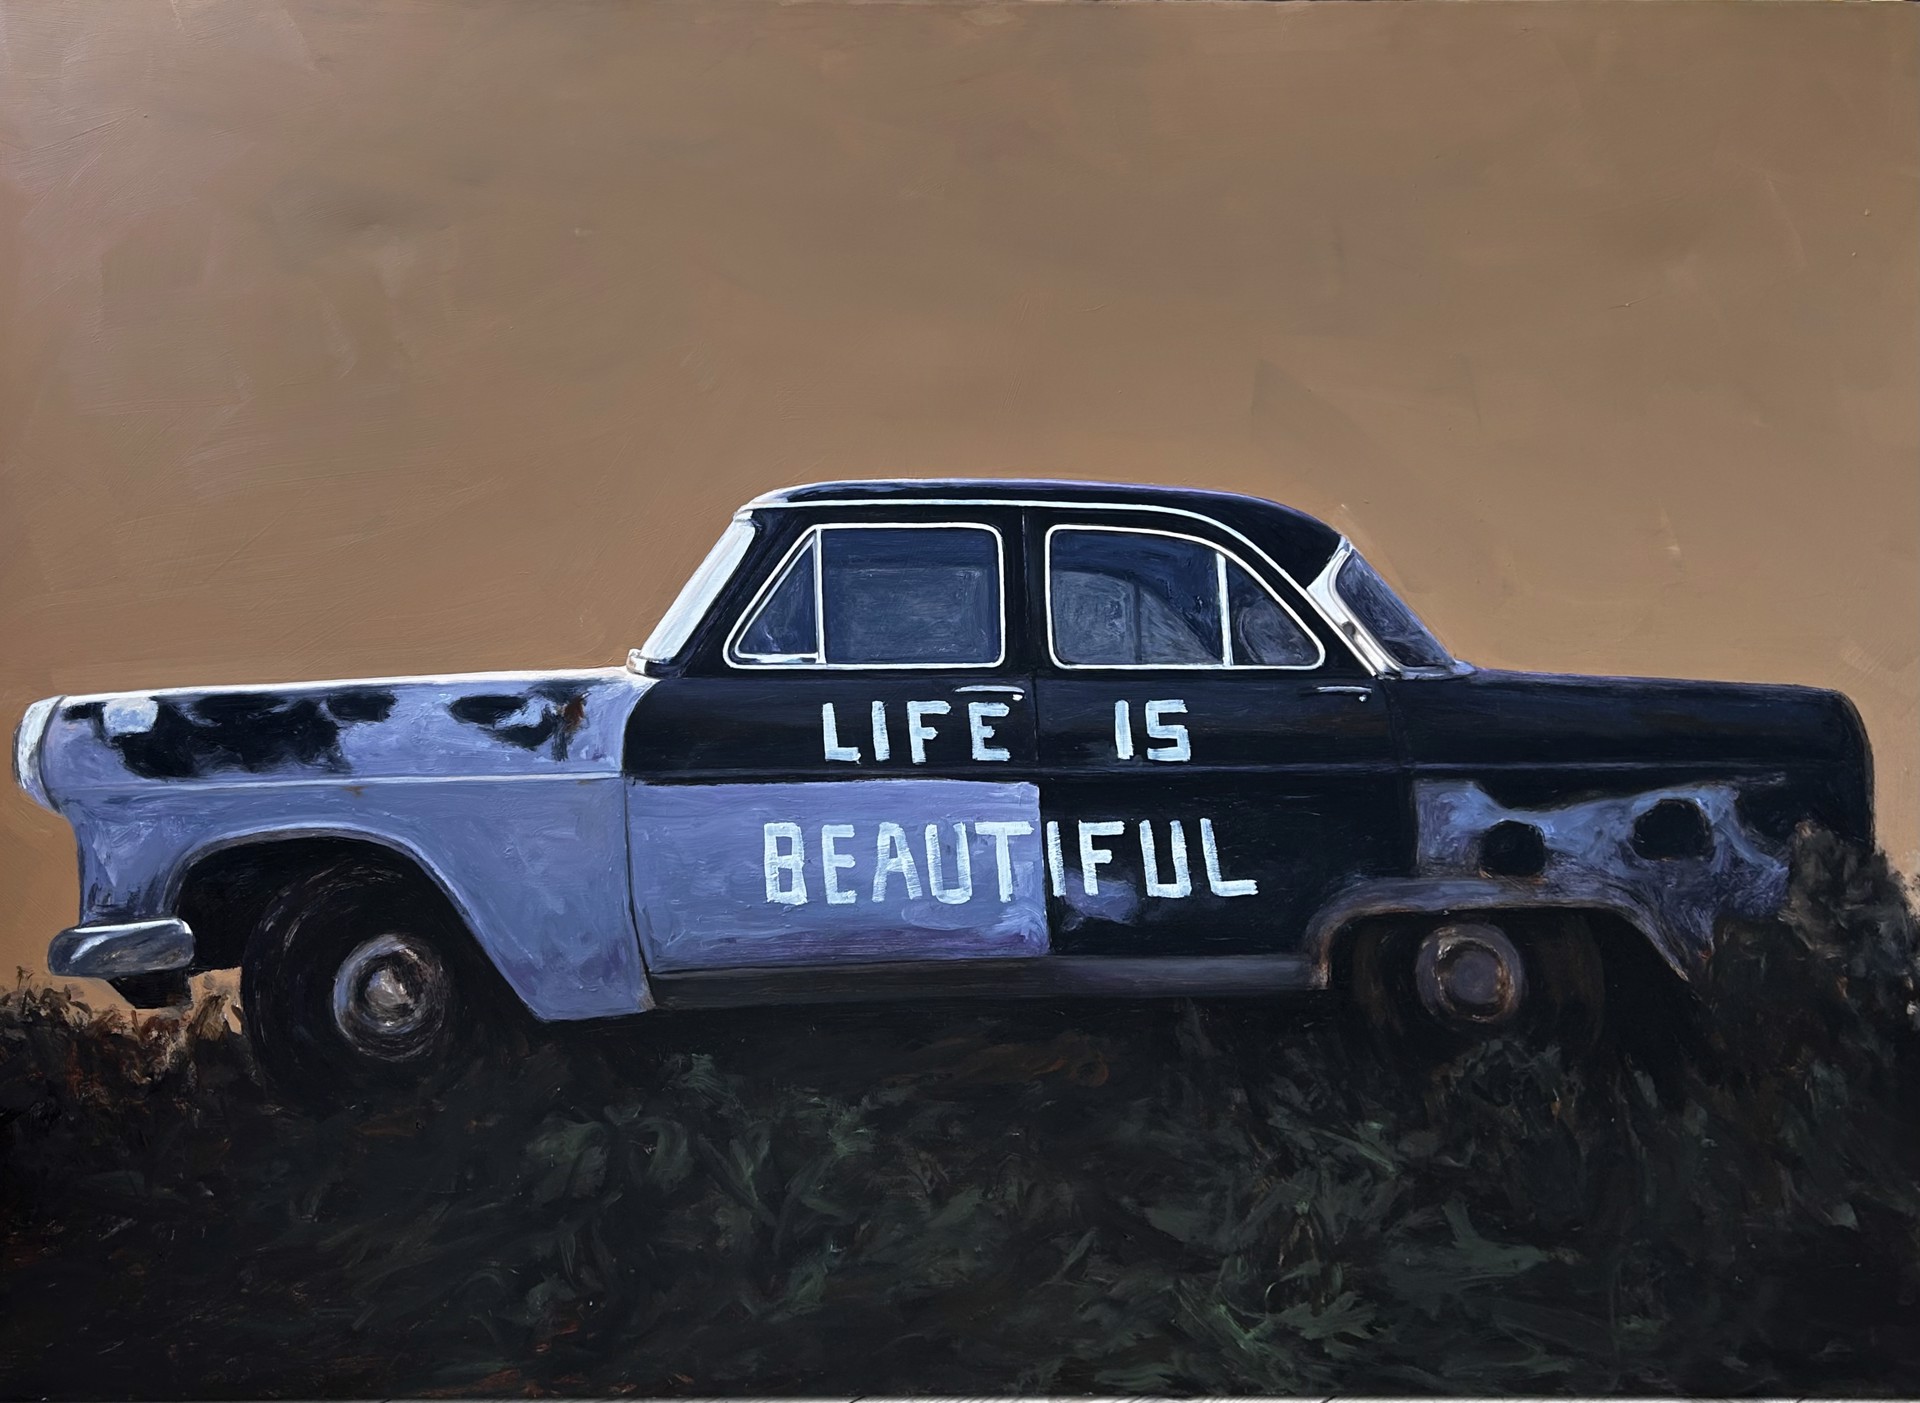 LIFE IS BEAUTIFUL by Matthew Belval